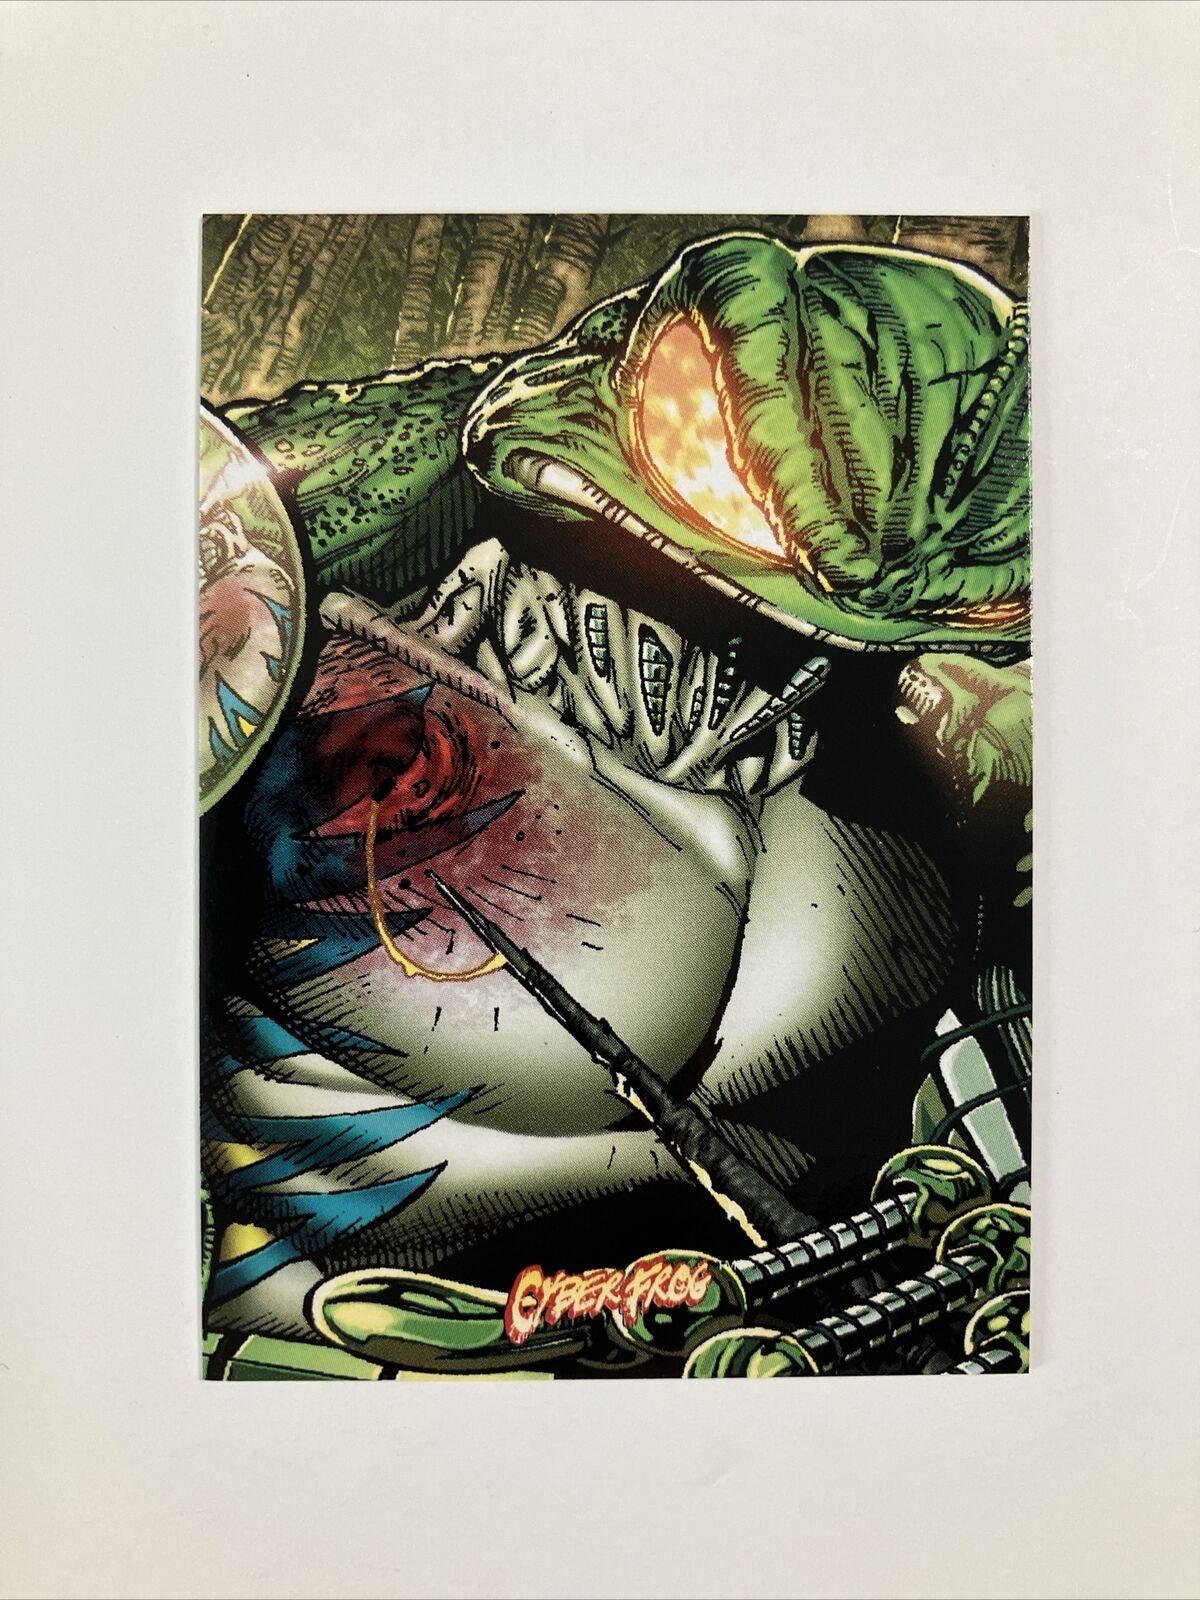 Cyberfrog Trading Card P23 “Stung” HTF Rare Van Sciver All Caps Comics